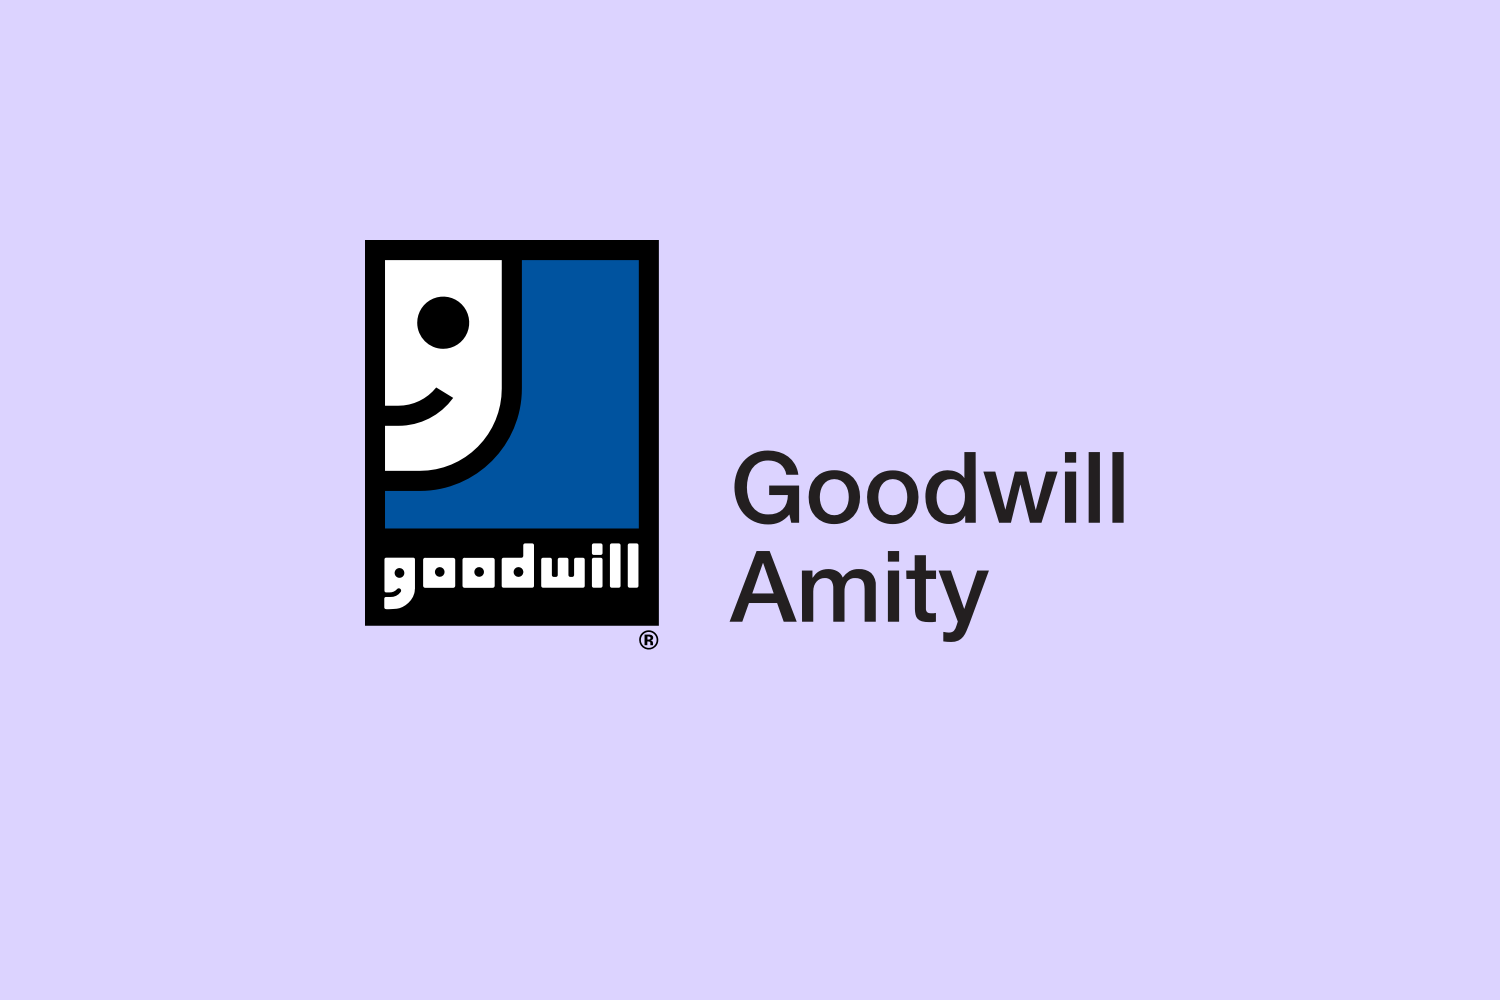 Goodwill Amity logo on purple background